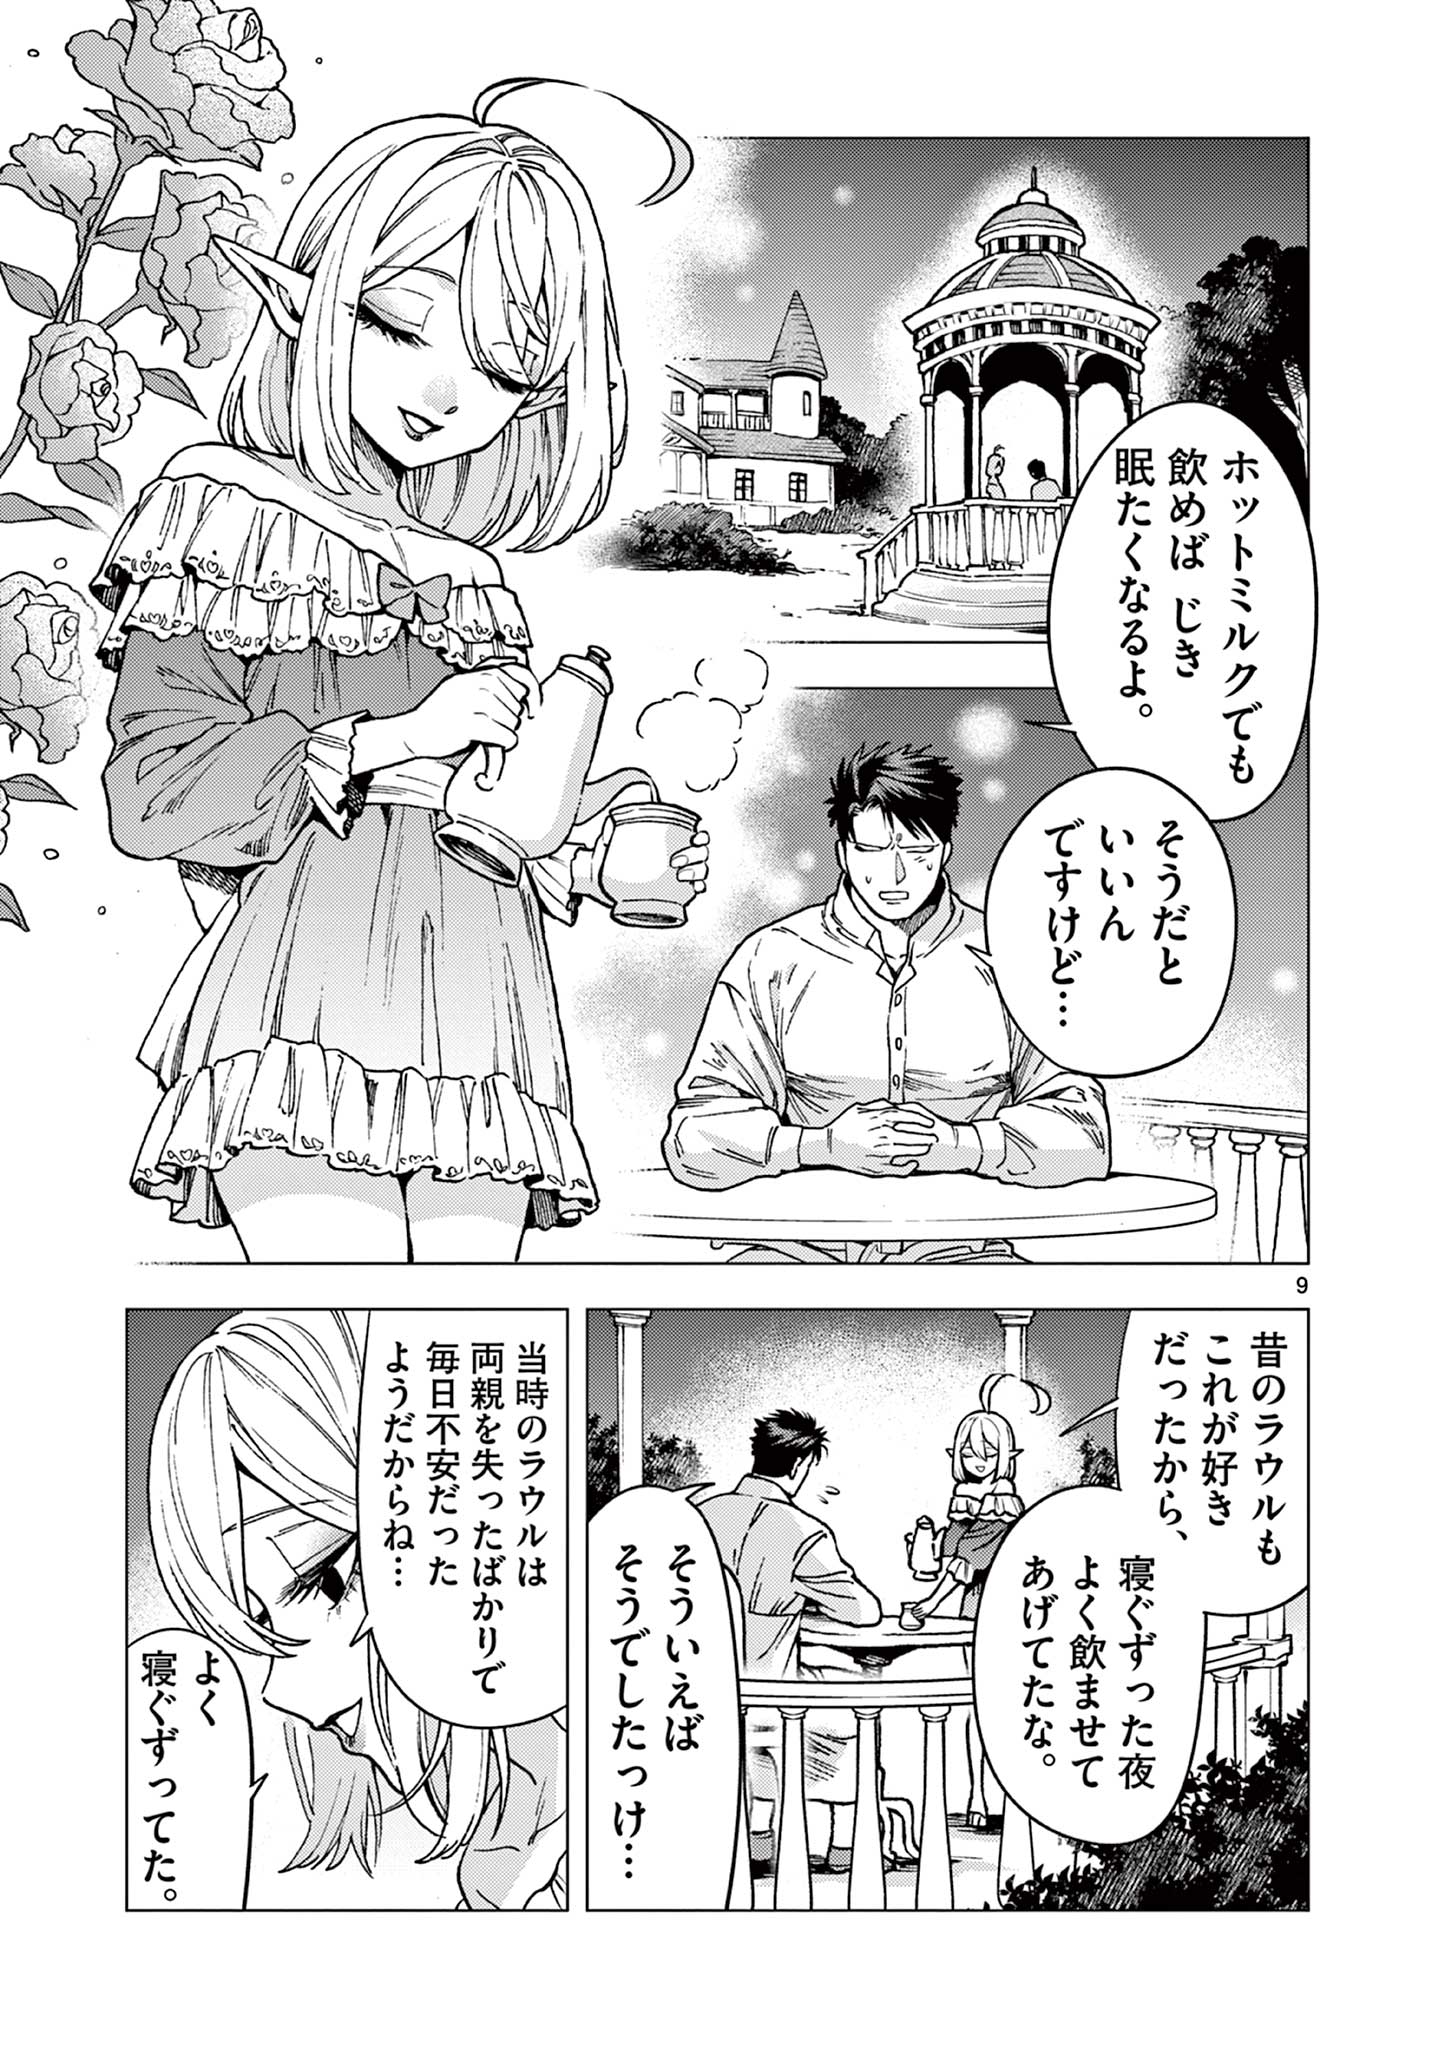 Raul to Kyuuketsuki - Chapter 5 - Page 9